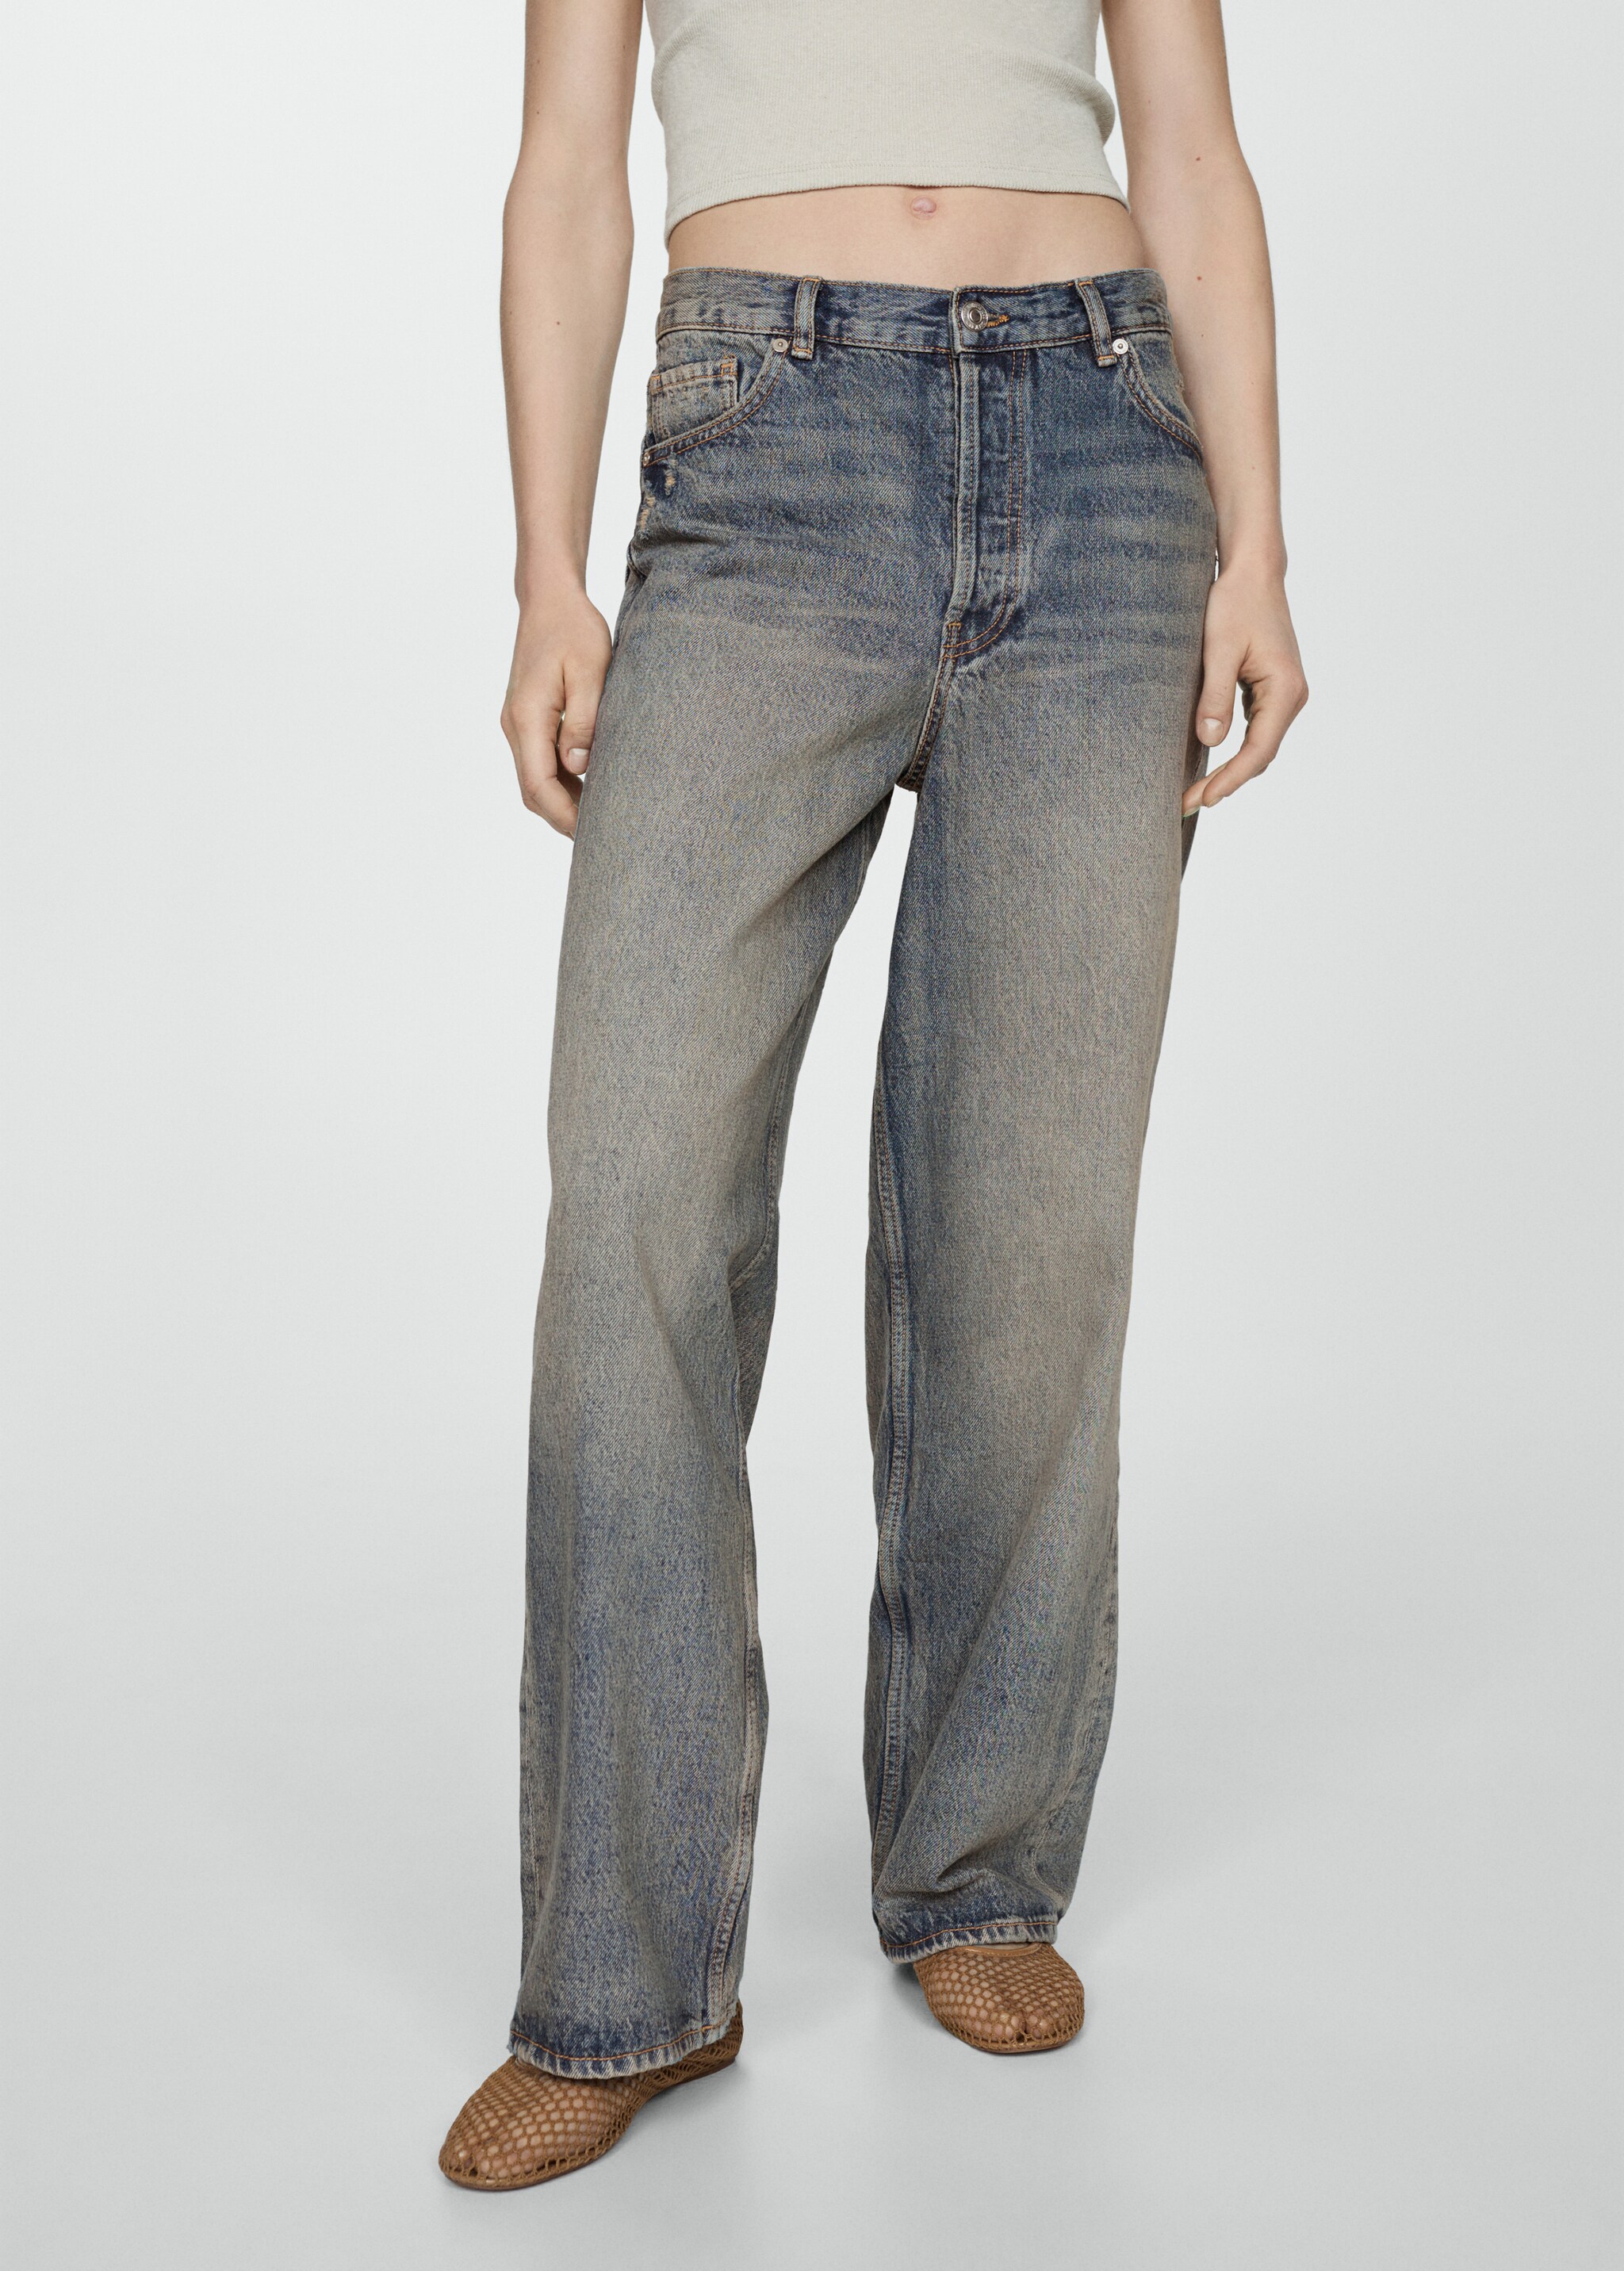 Orta bel wideleg jean pantolon - Orta plan